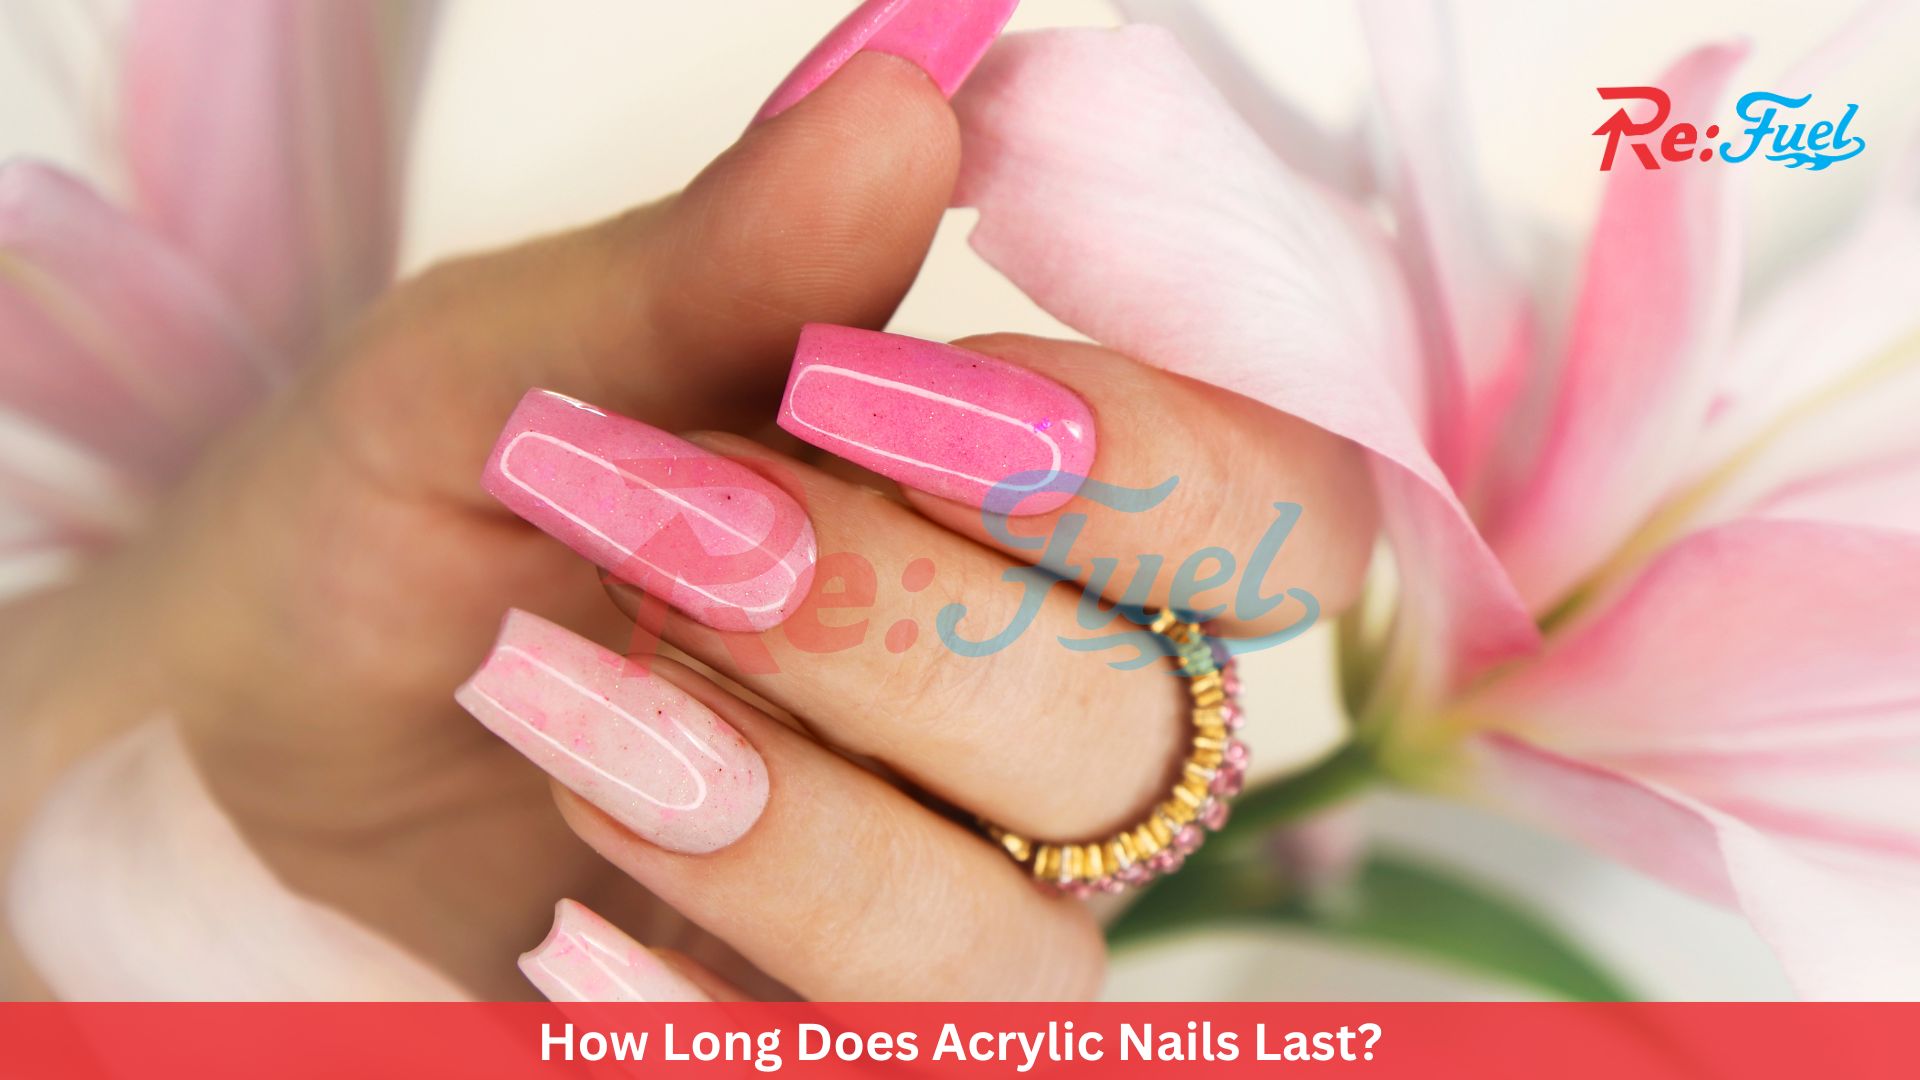 How Long Does Acrylic Nails Last?